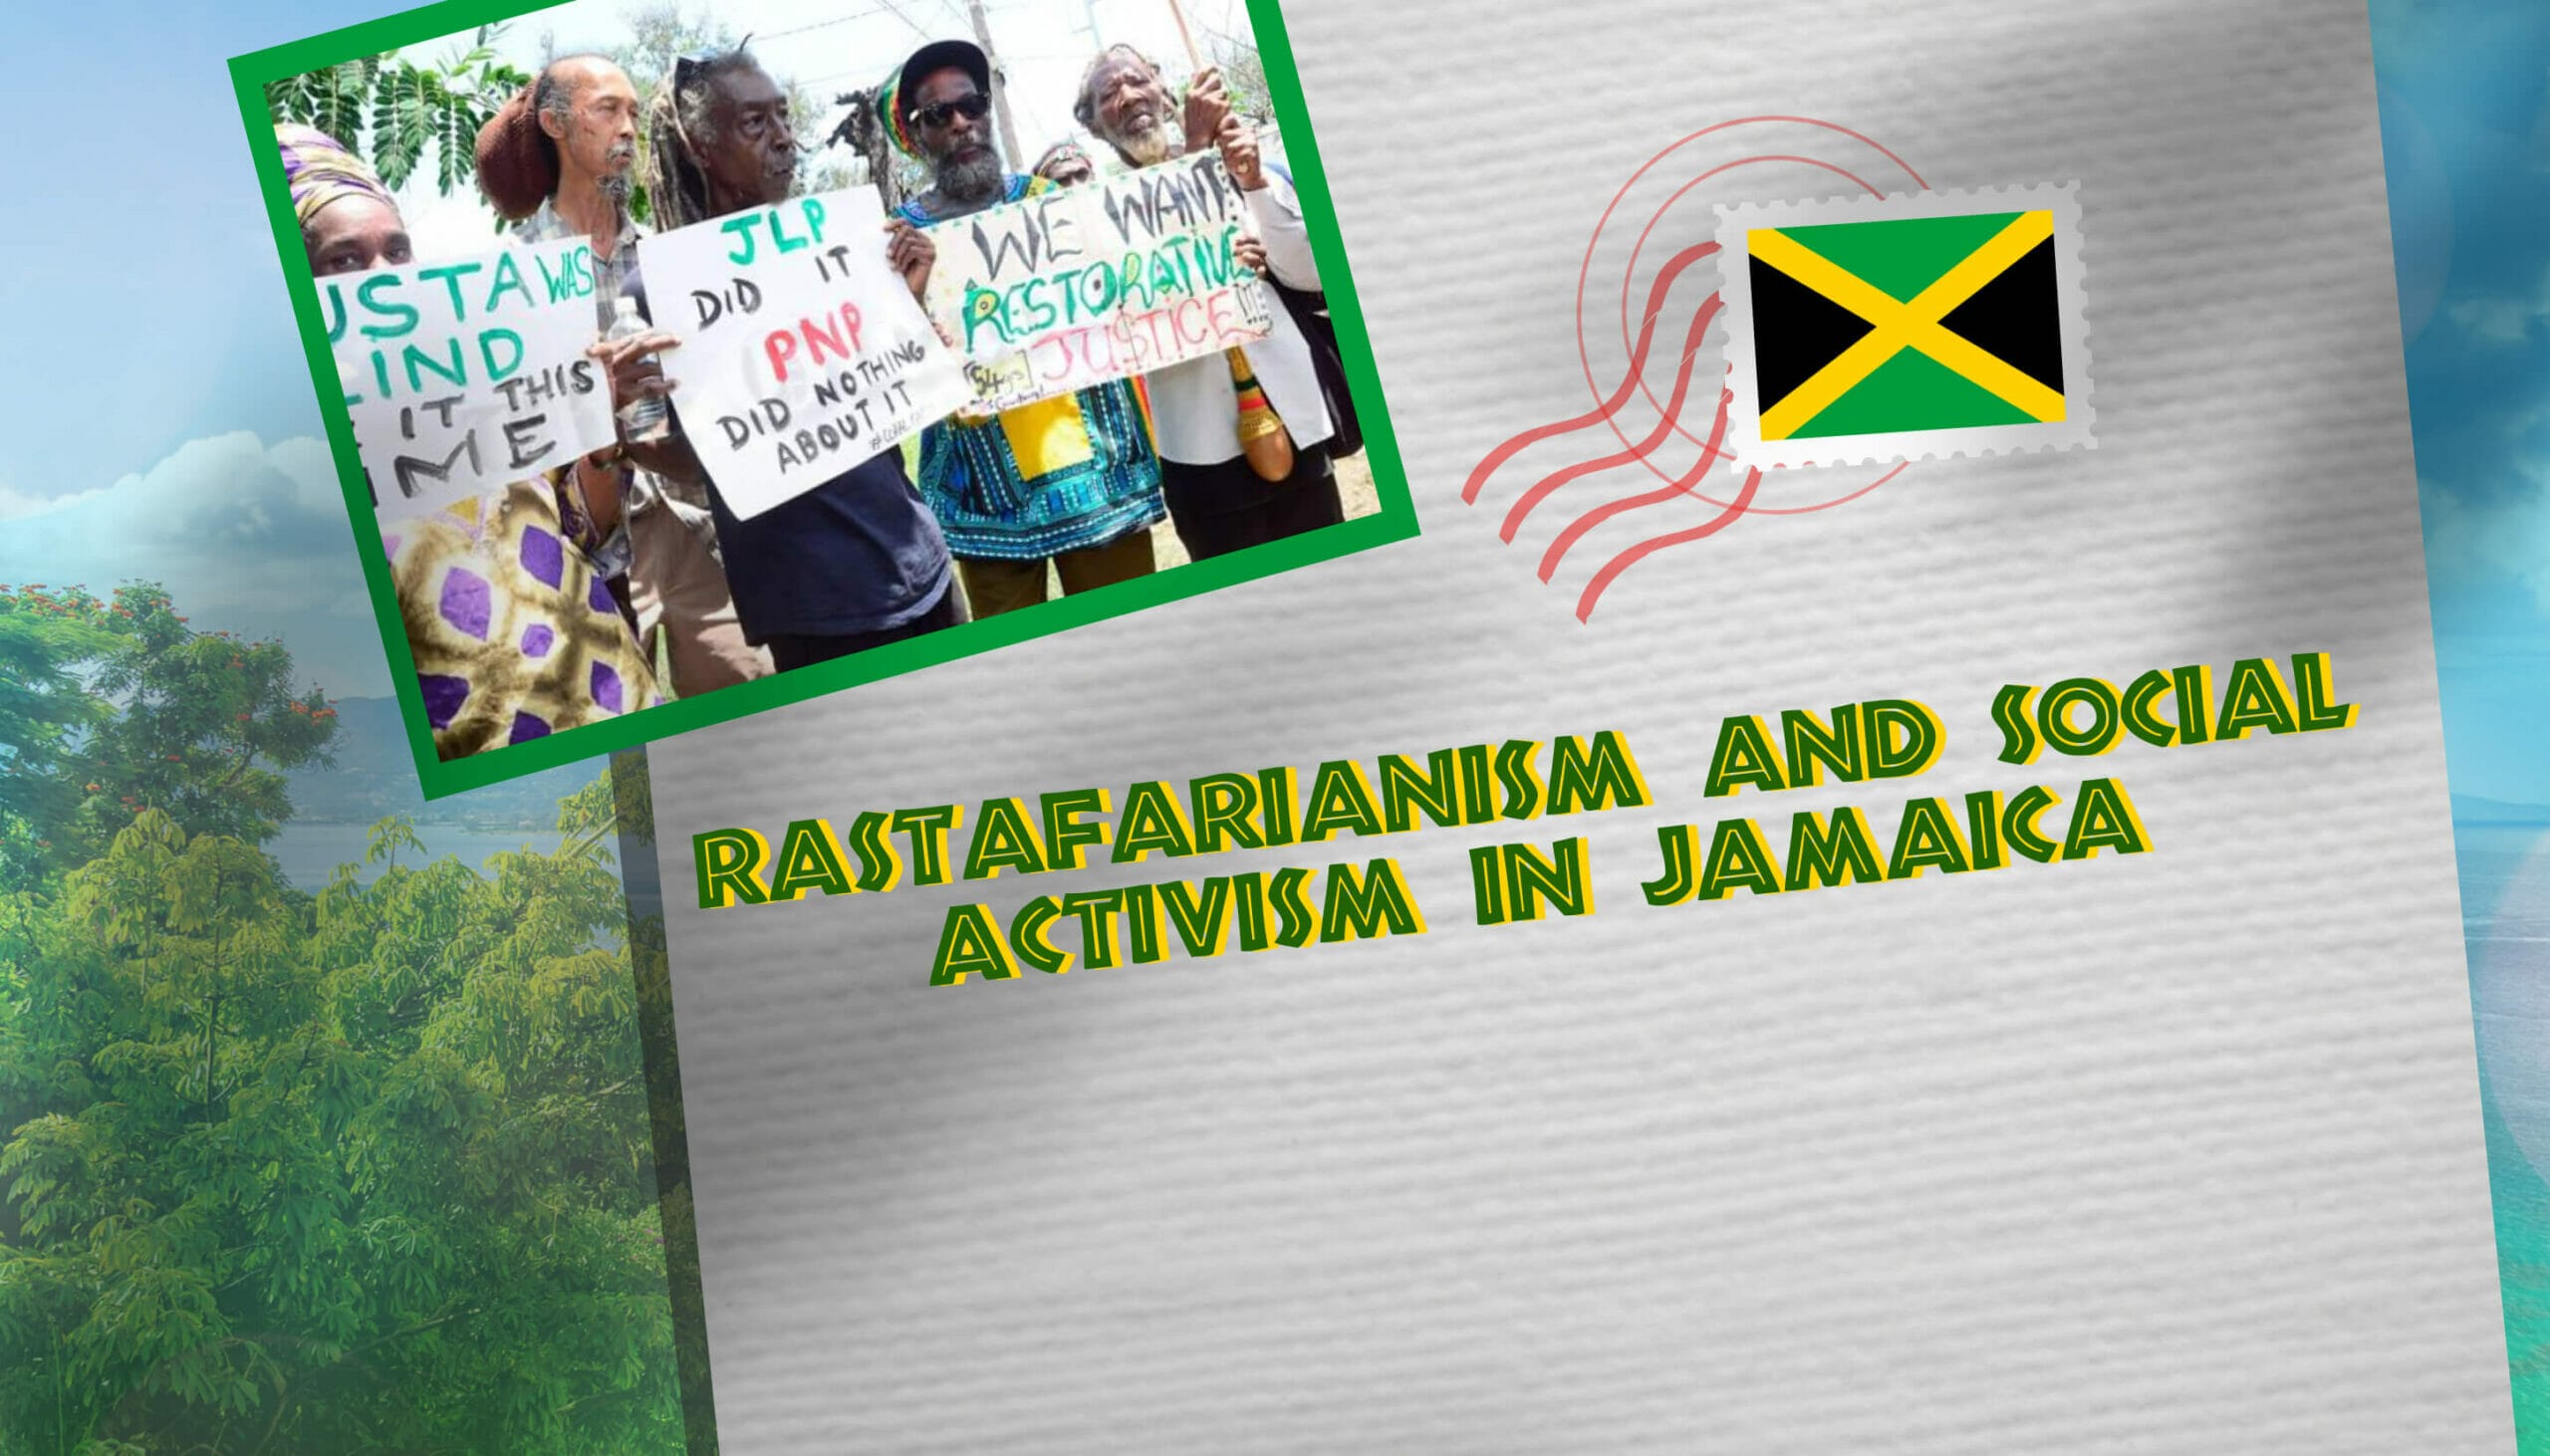 Rastafarianism and social activism in Jamaica